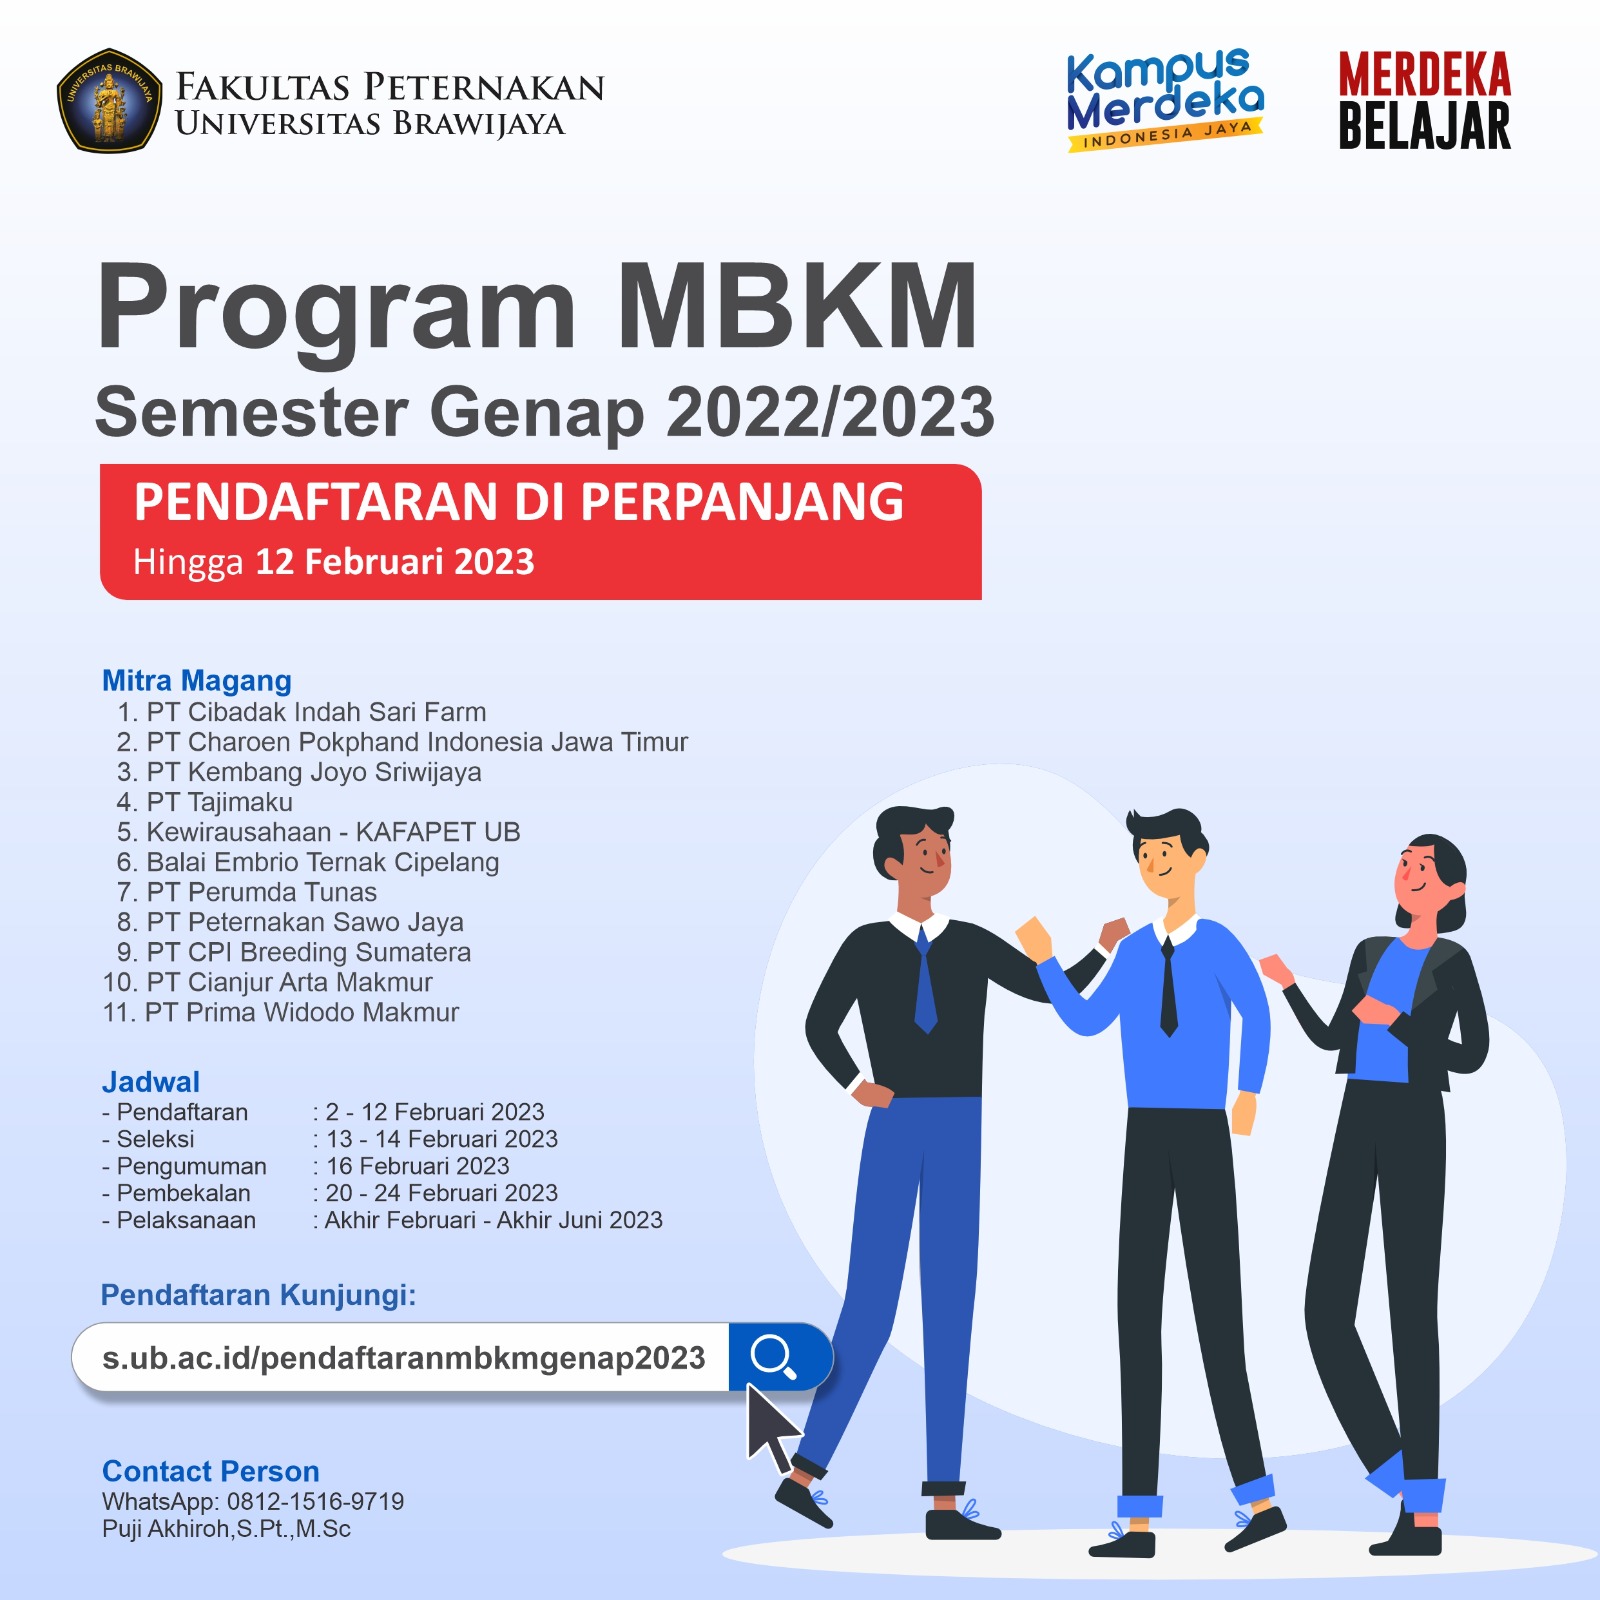 Registration of MBKM Program